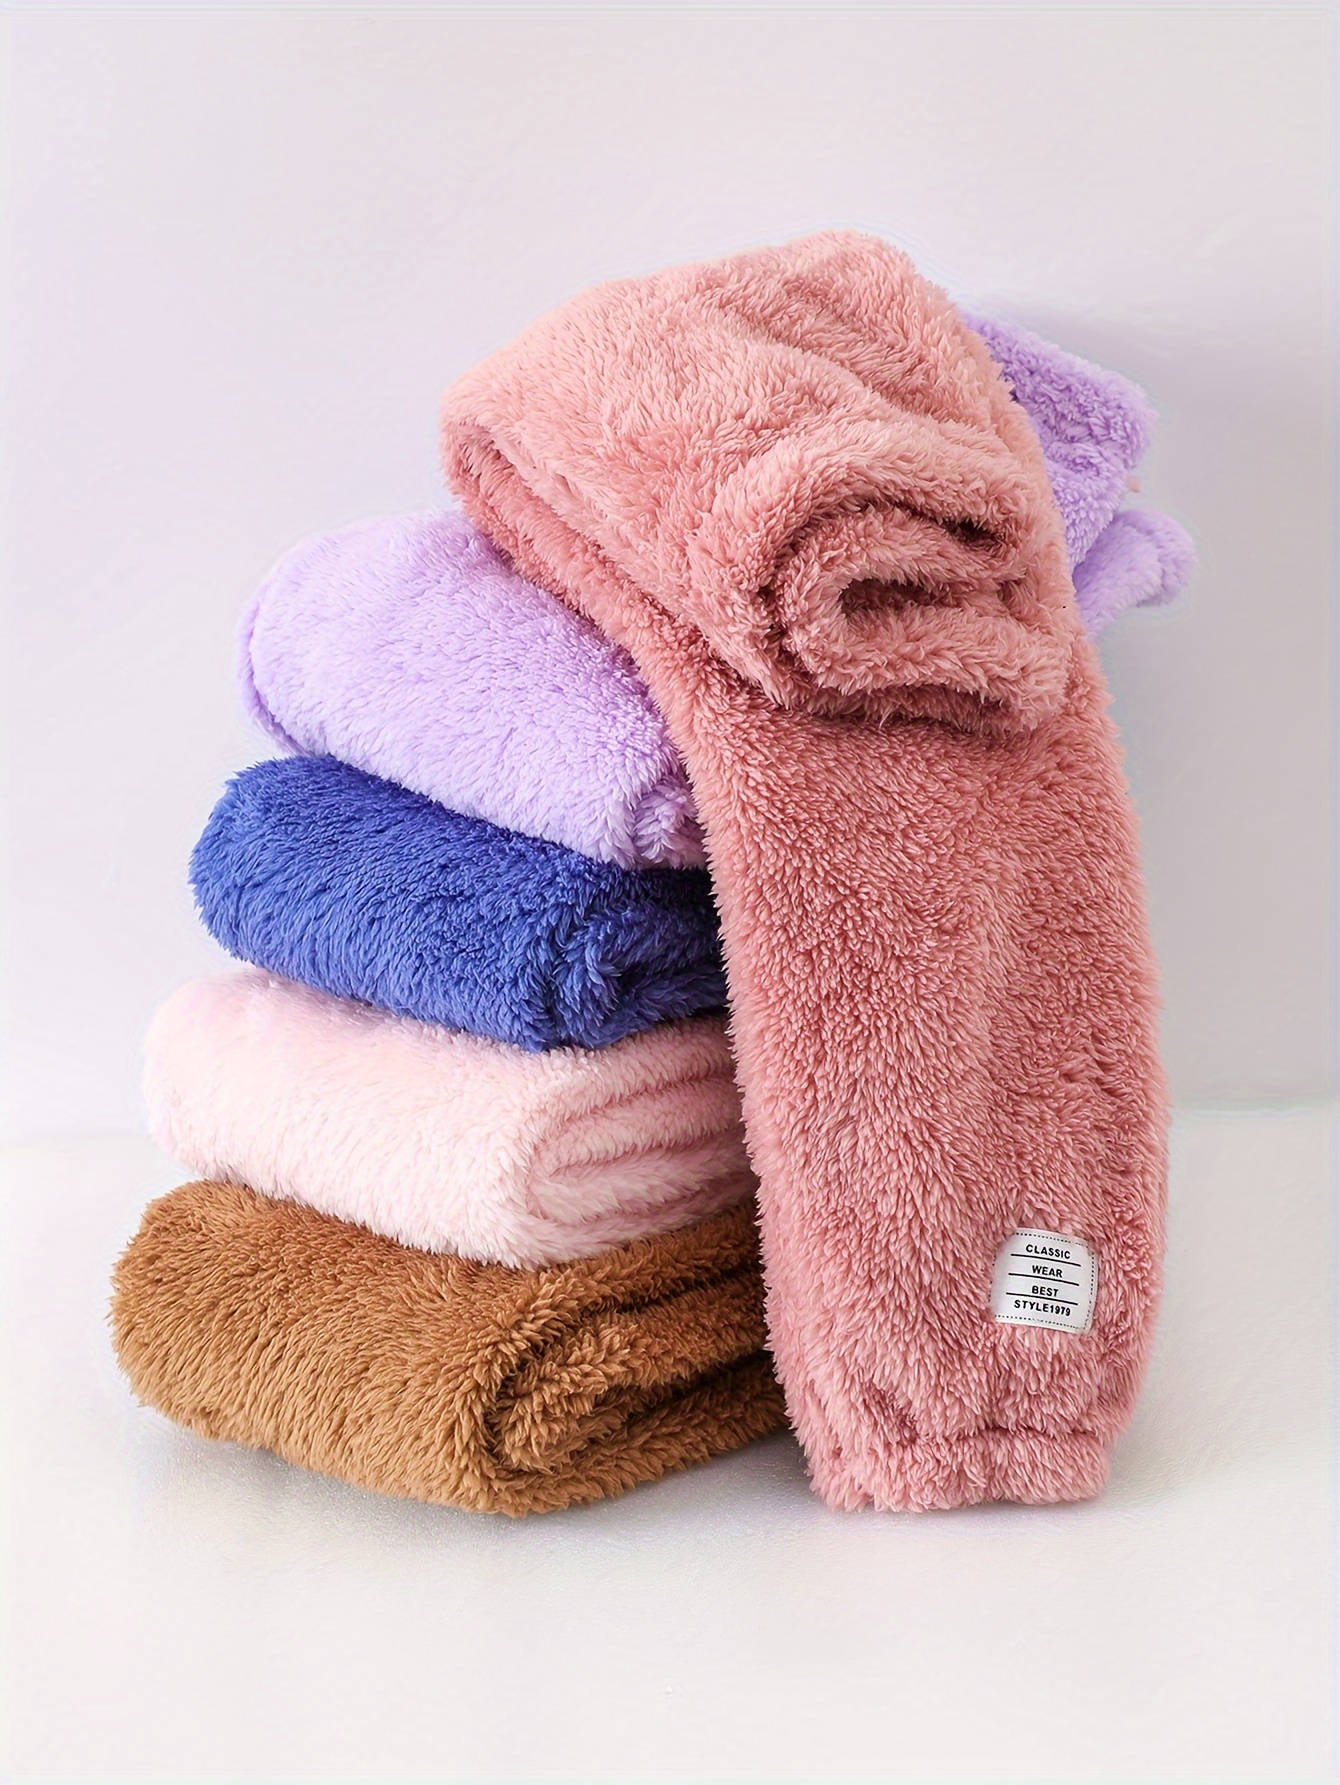 Pantalones de lana de felpa para niñas, ropa de otoño e invierno